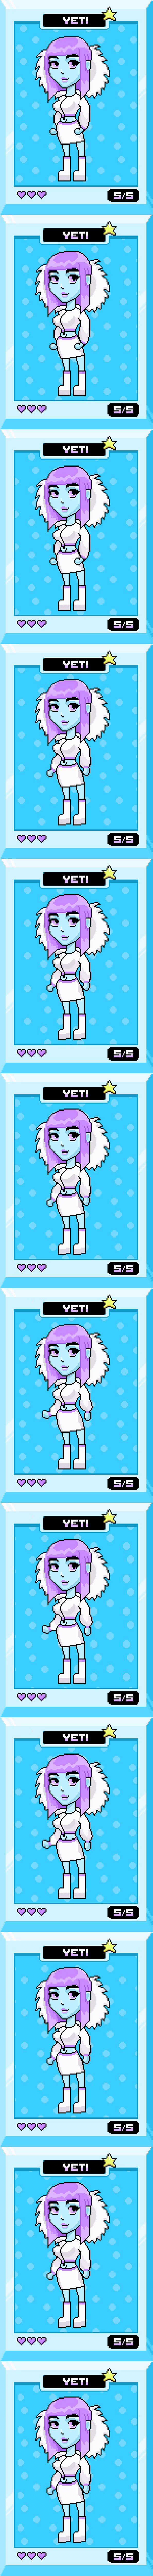 Monsty #8: Yvette the Yeti